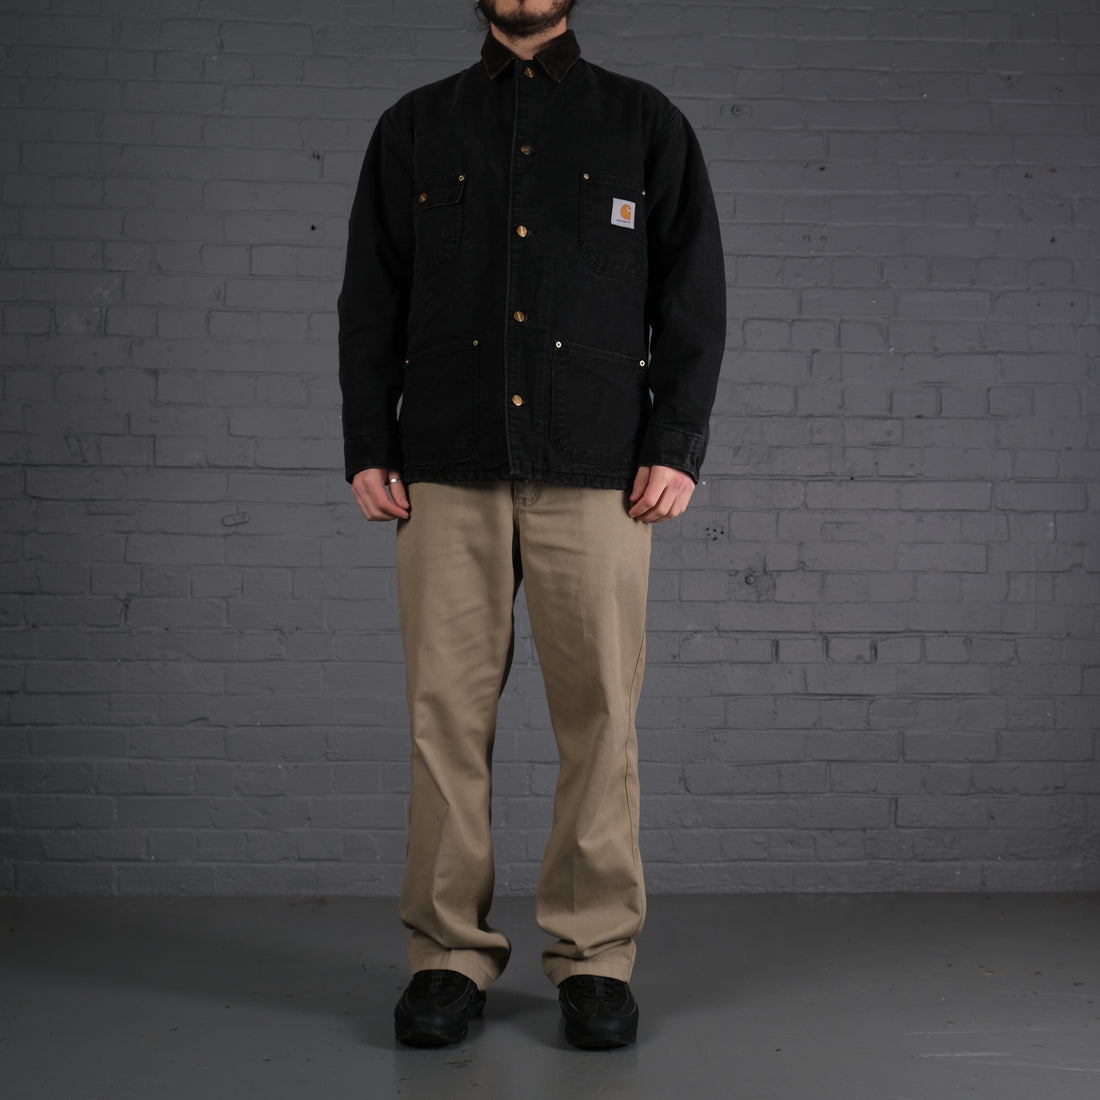 Vintage Carhartt Michigan Jacket in Black